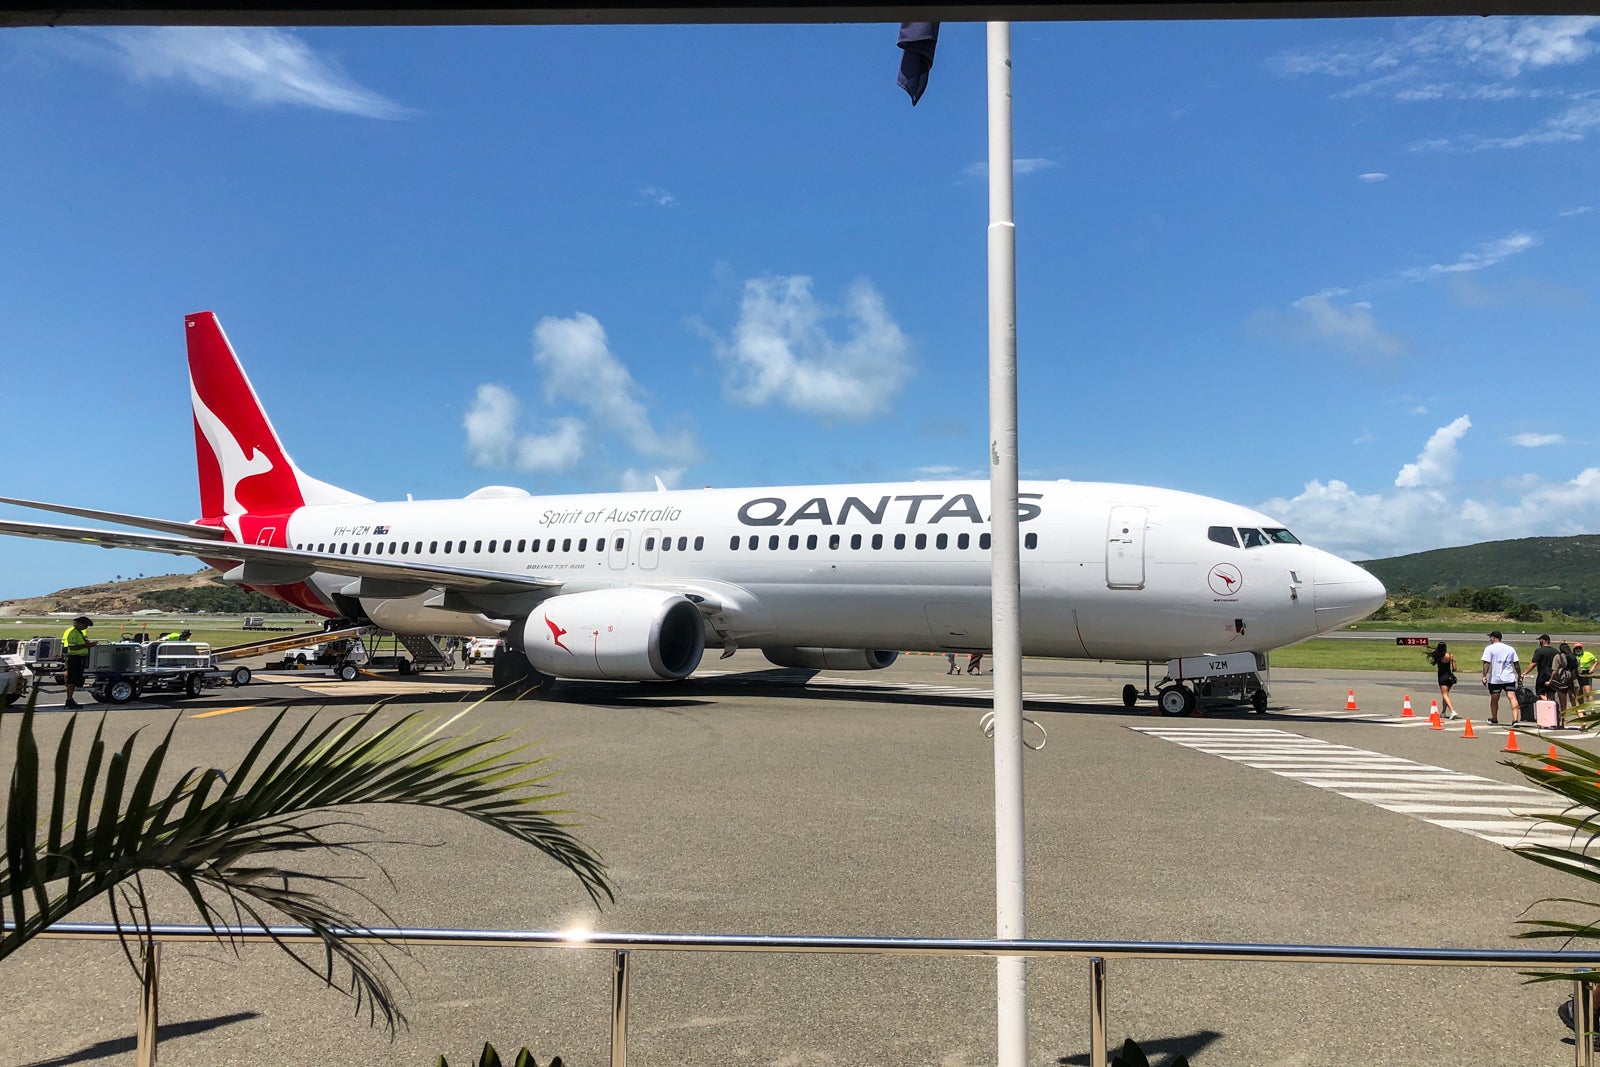 03.22.2022 Intercontinental Hayman Is ERosen Qantas plane